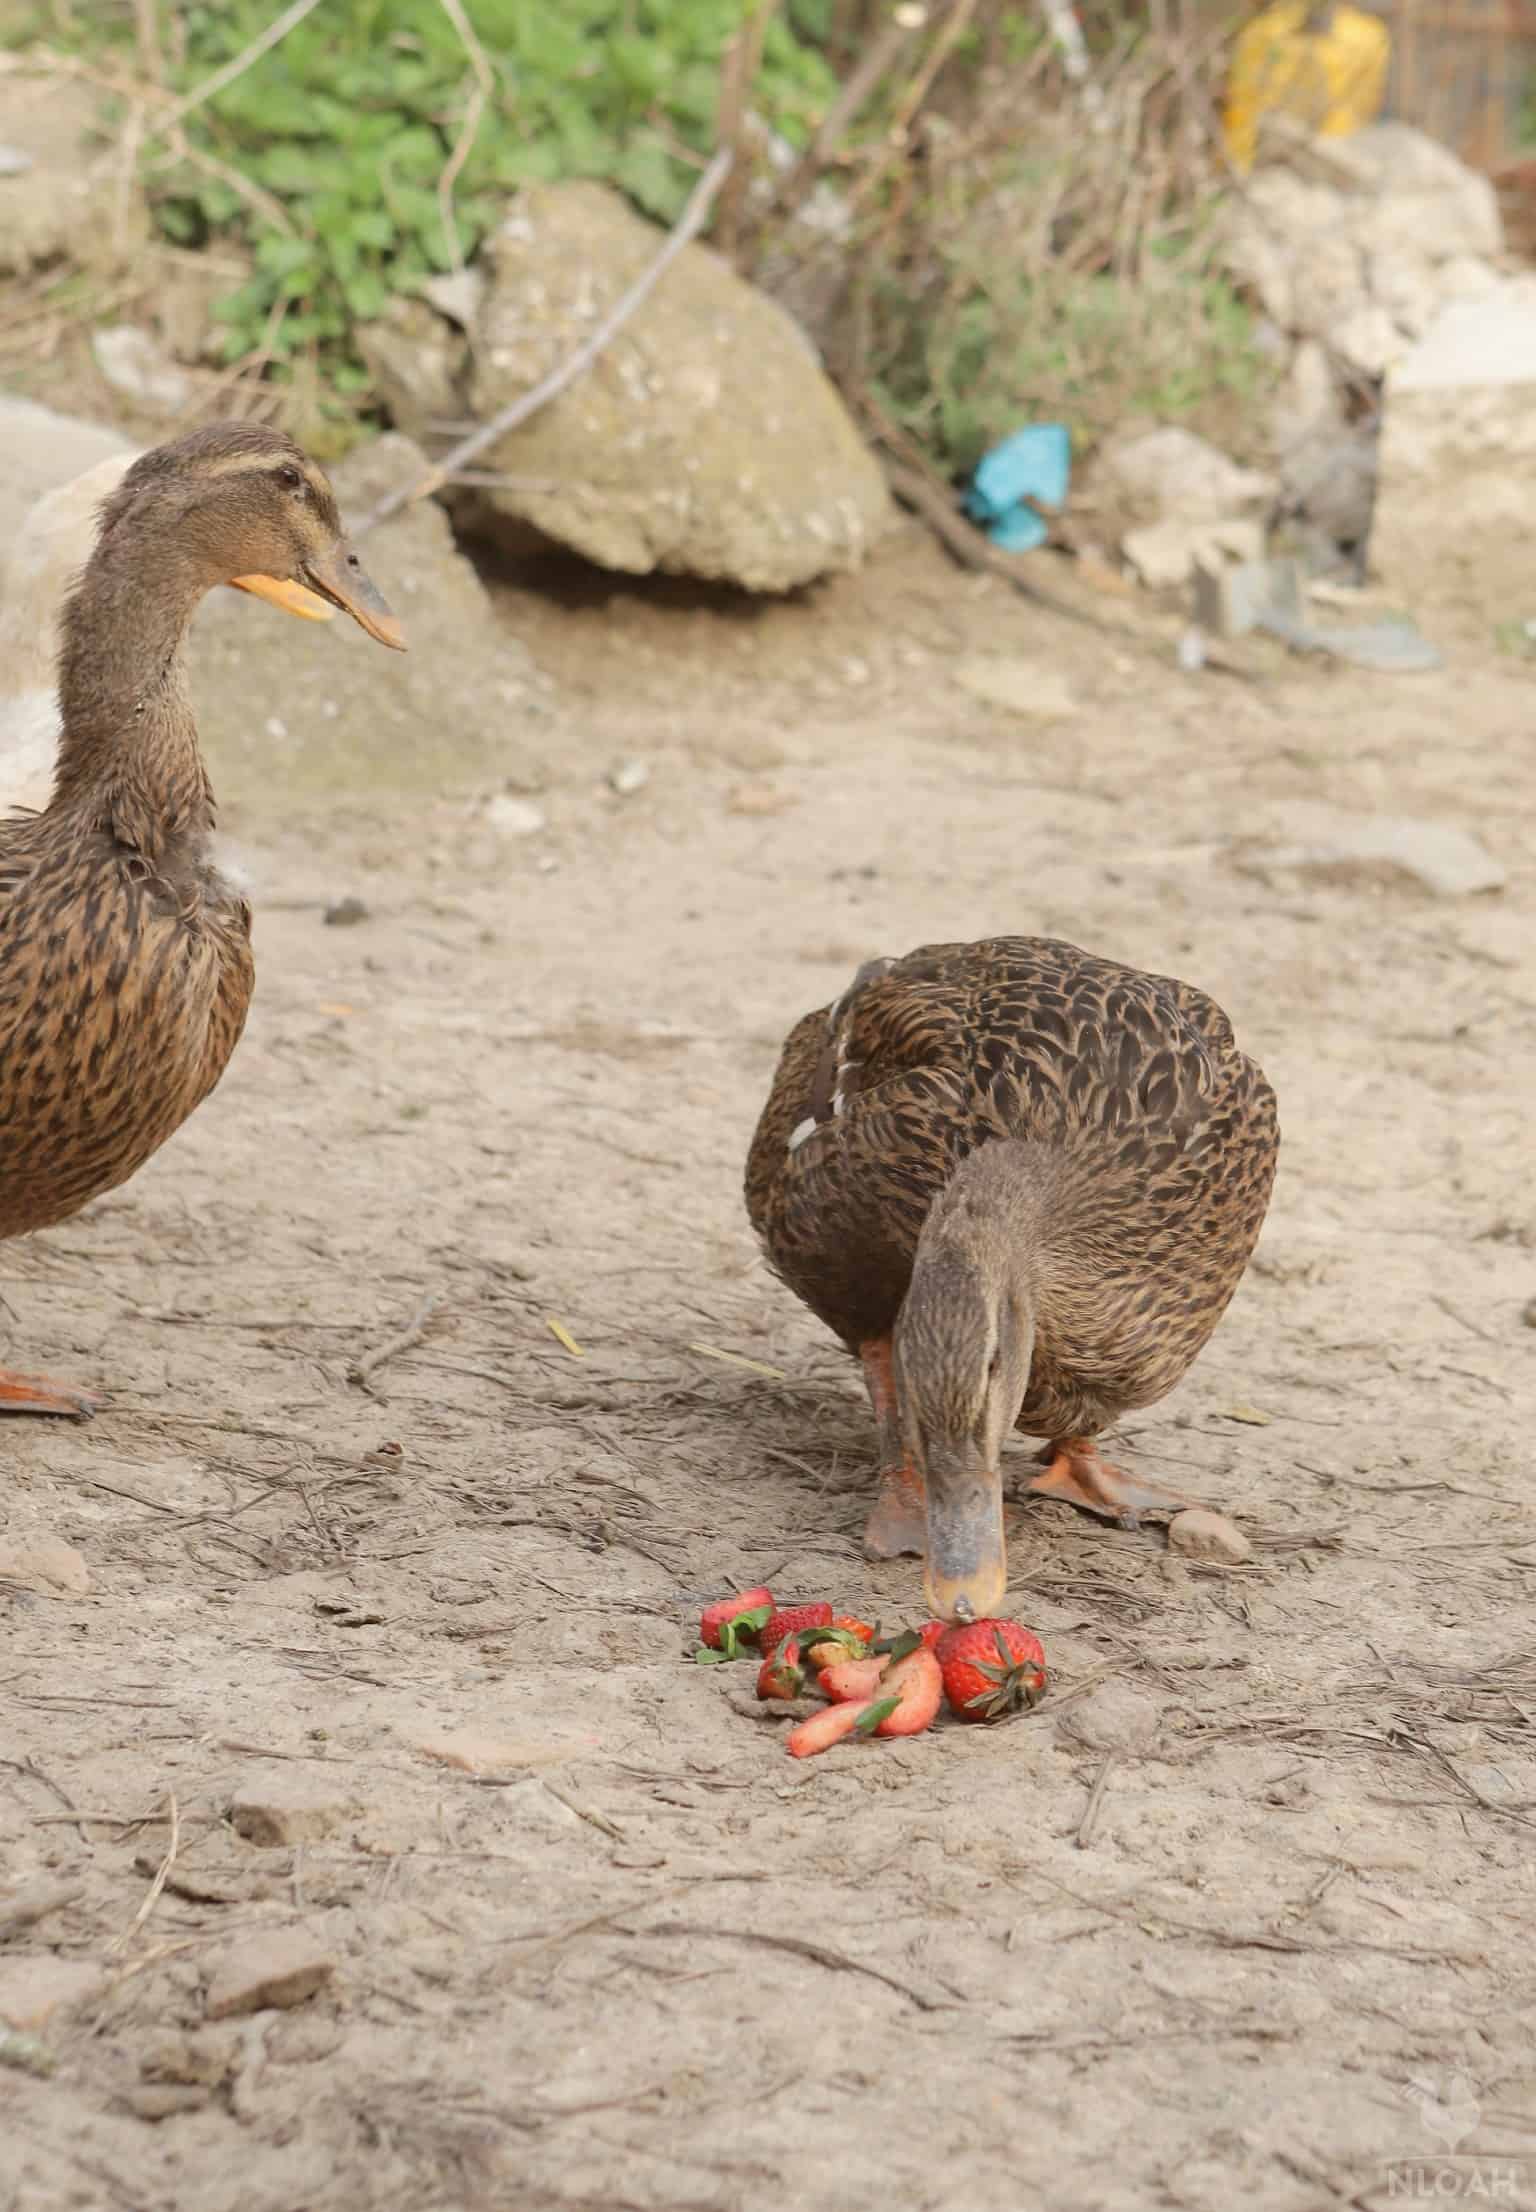 ducks eating strawberries